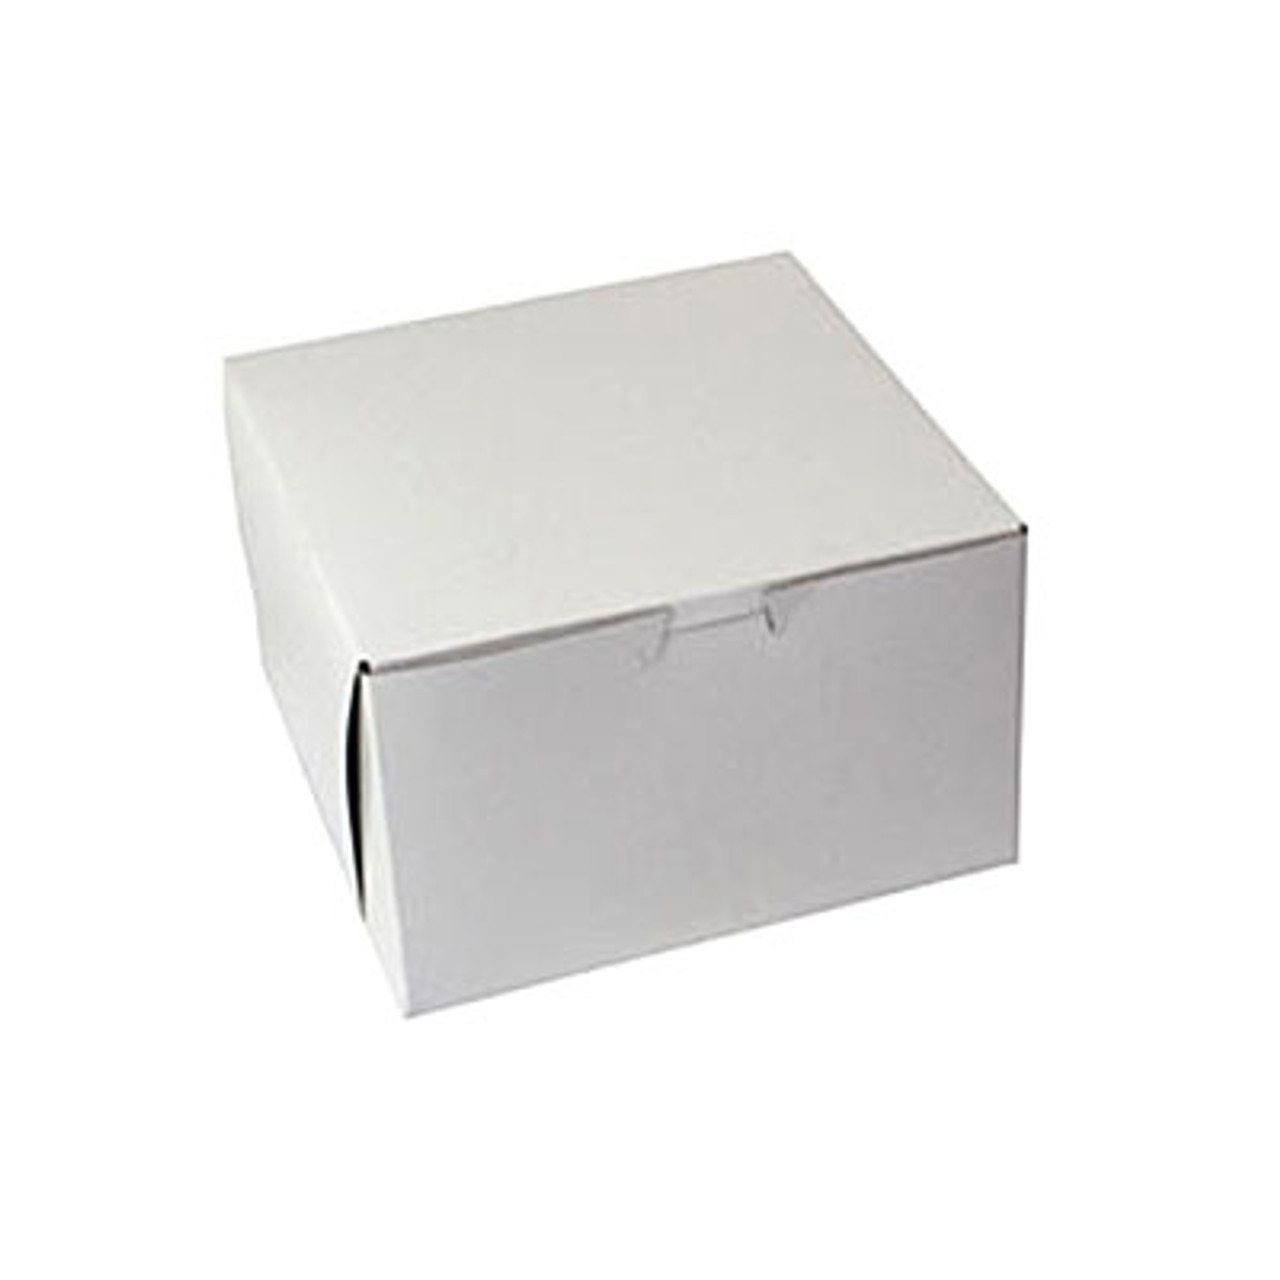 8"l x 8"w x 5"h White Bakery Cake Box per 100